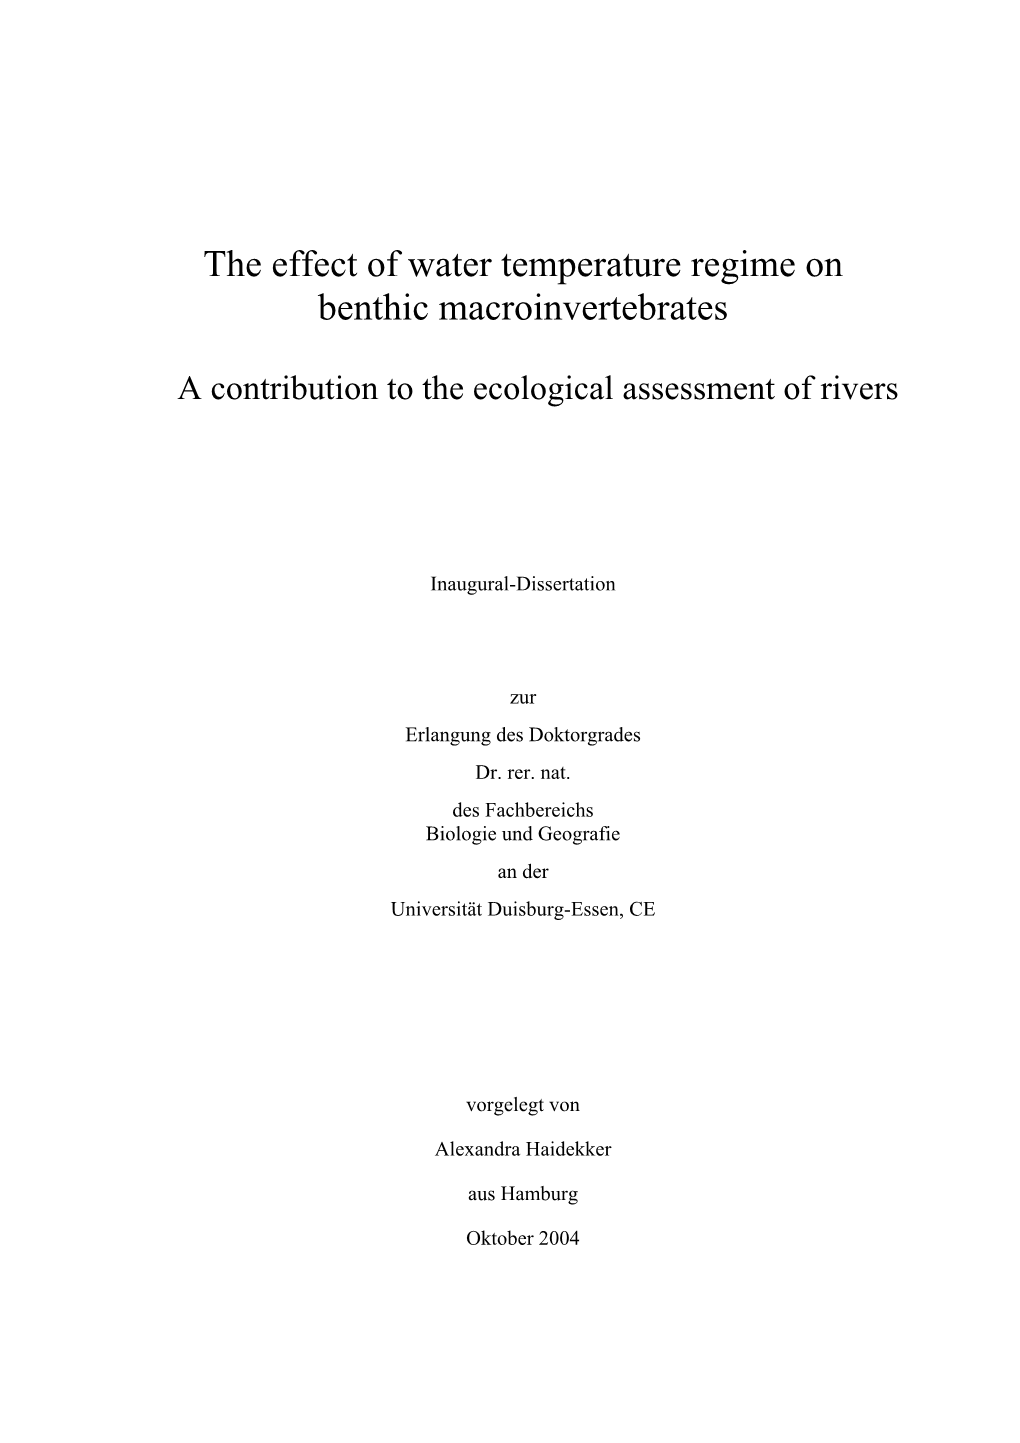 The Effect of Water Temperature Regime on Benthic Macroinvertebrates